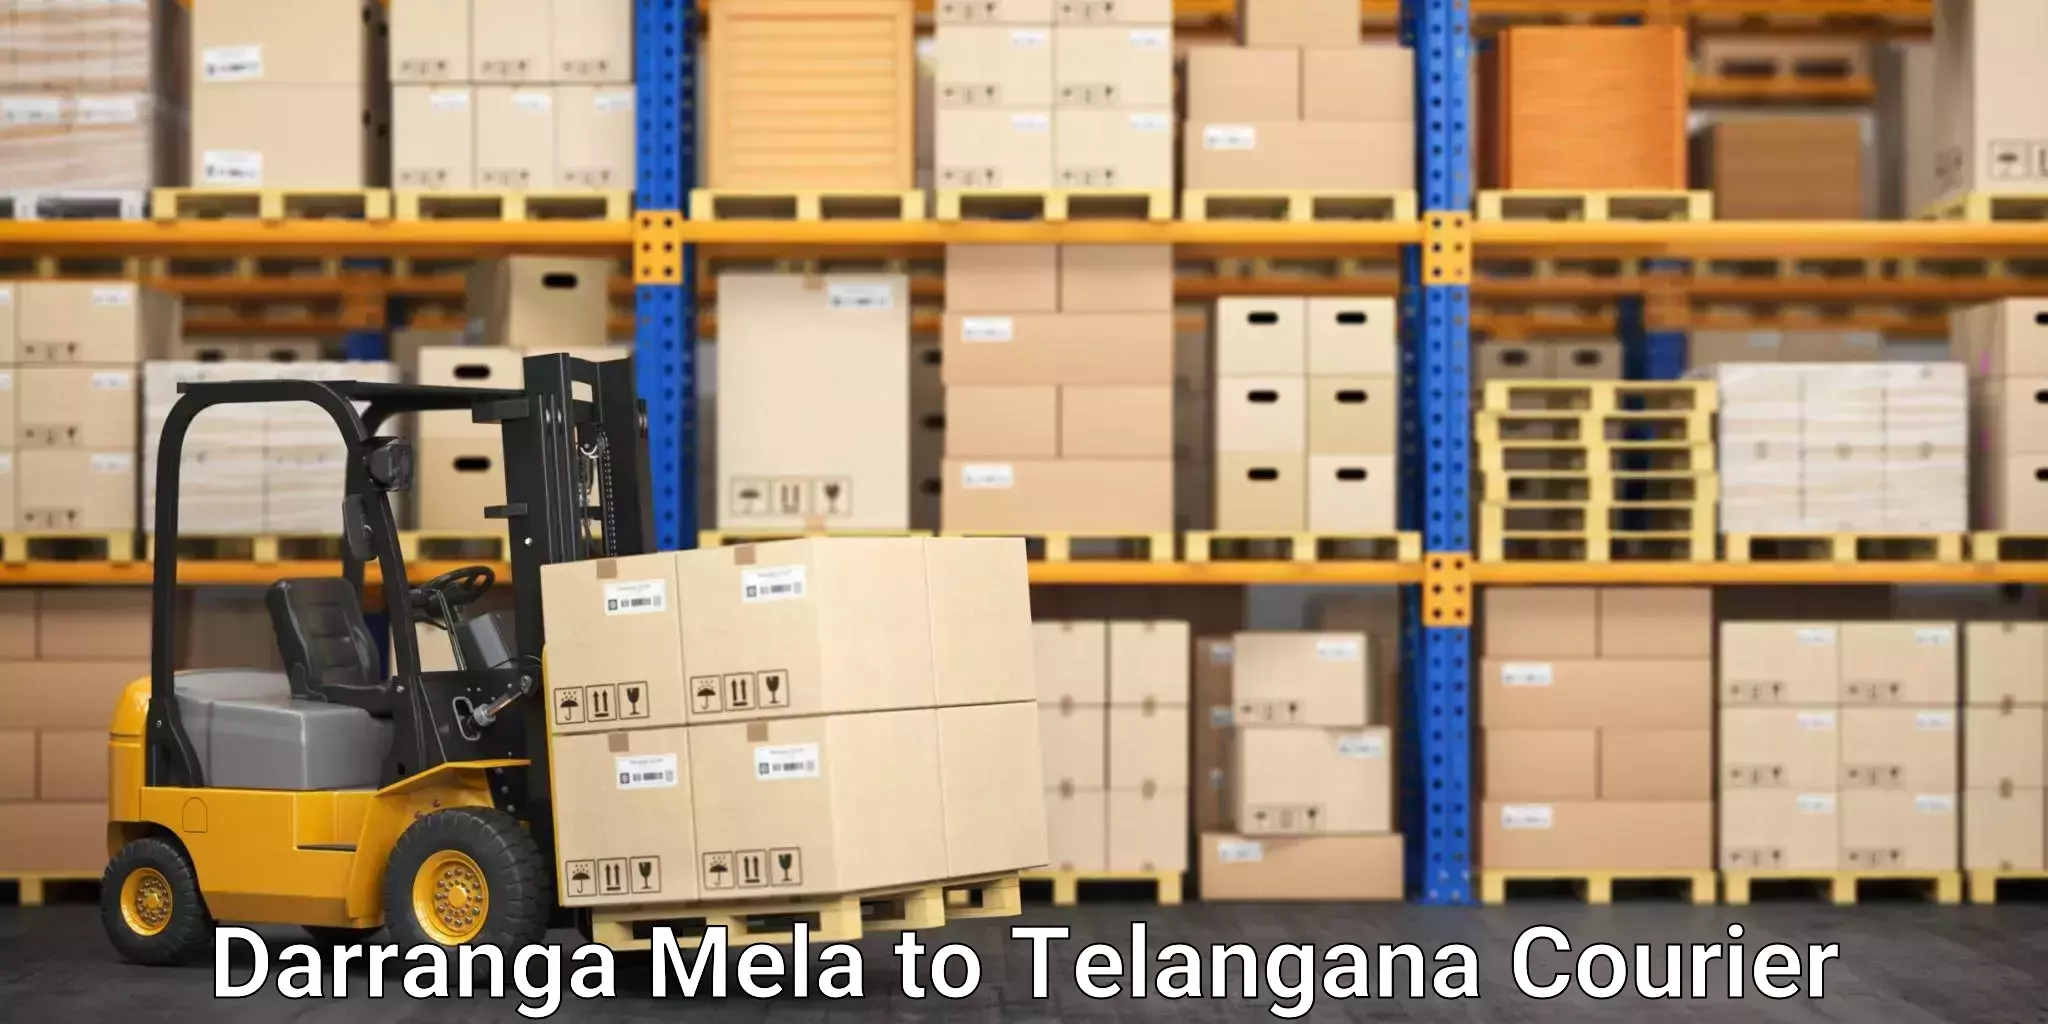 Global shipping networks Darranga Mela to Kaghaznagar